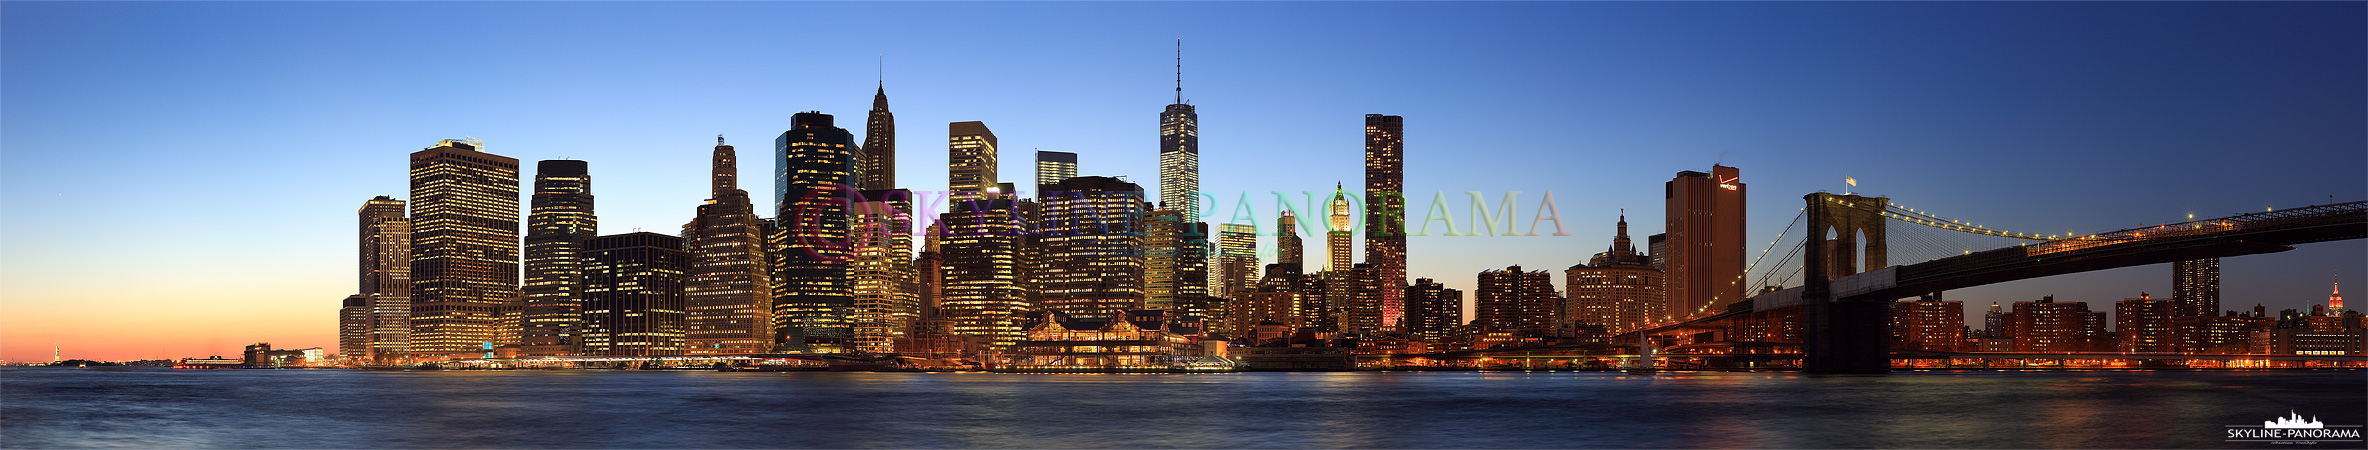 Skyline New York - USA (p_00636) - skyline-panorama.de